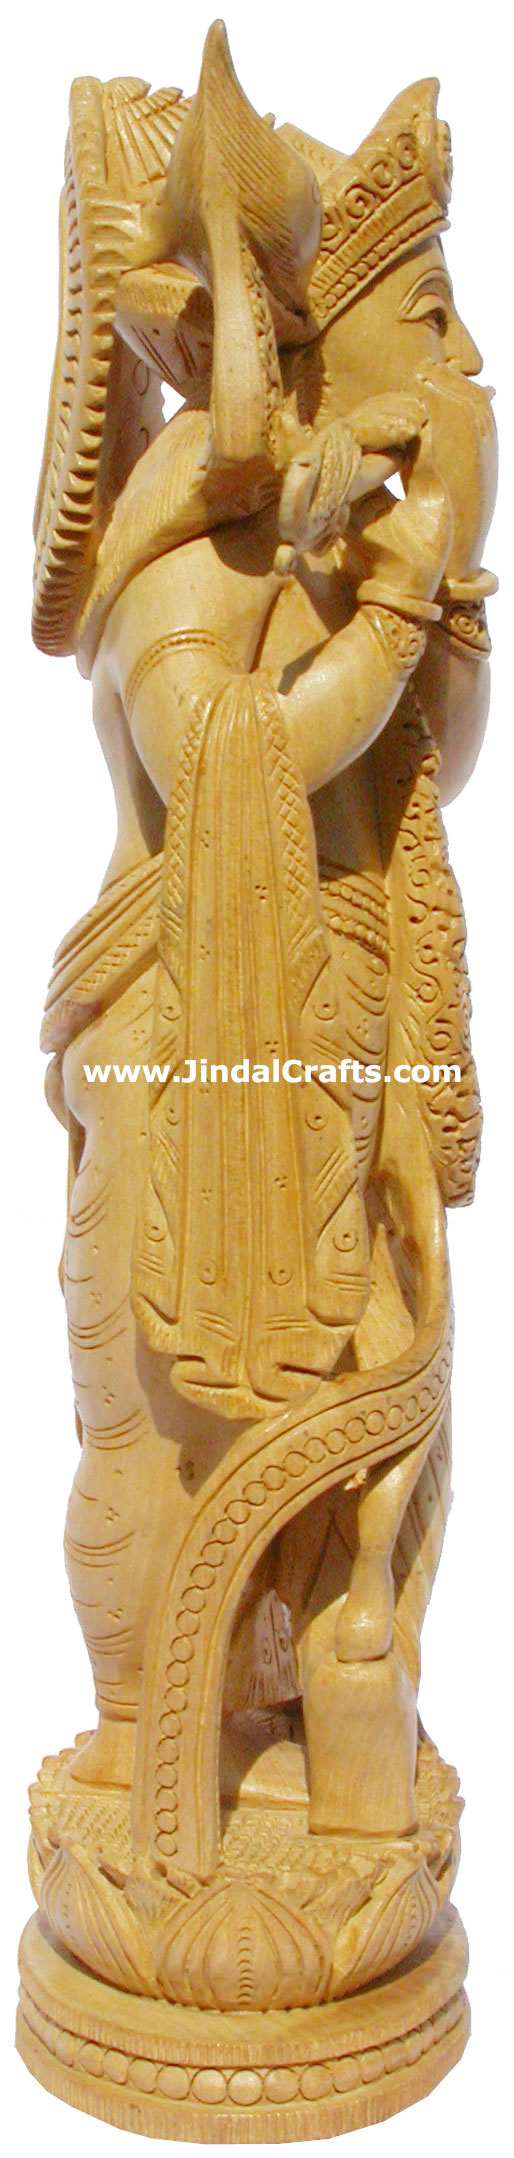 Wood Sculpture Handmade Lord Krishna Hindu Art India